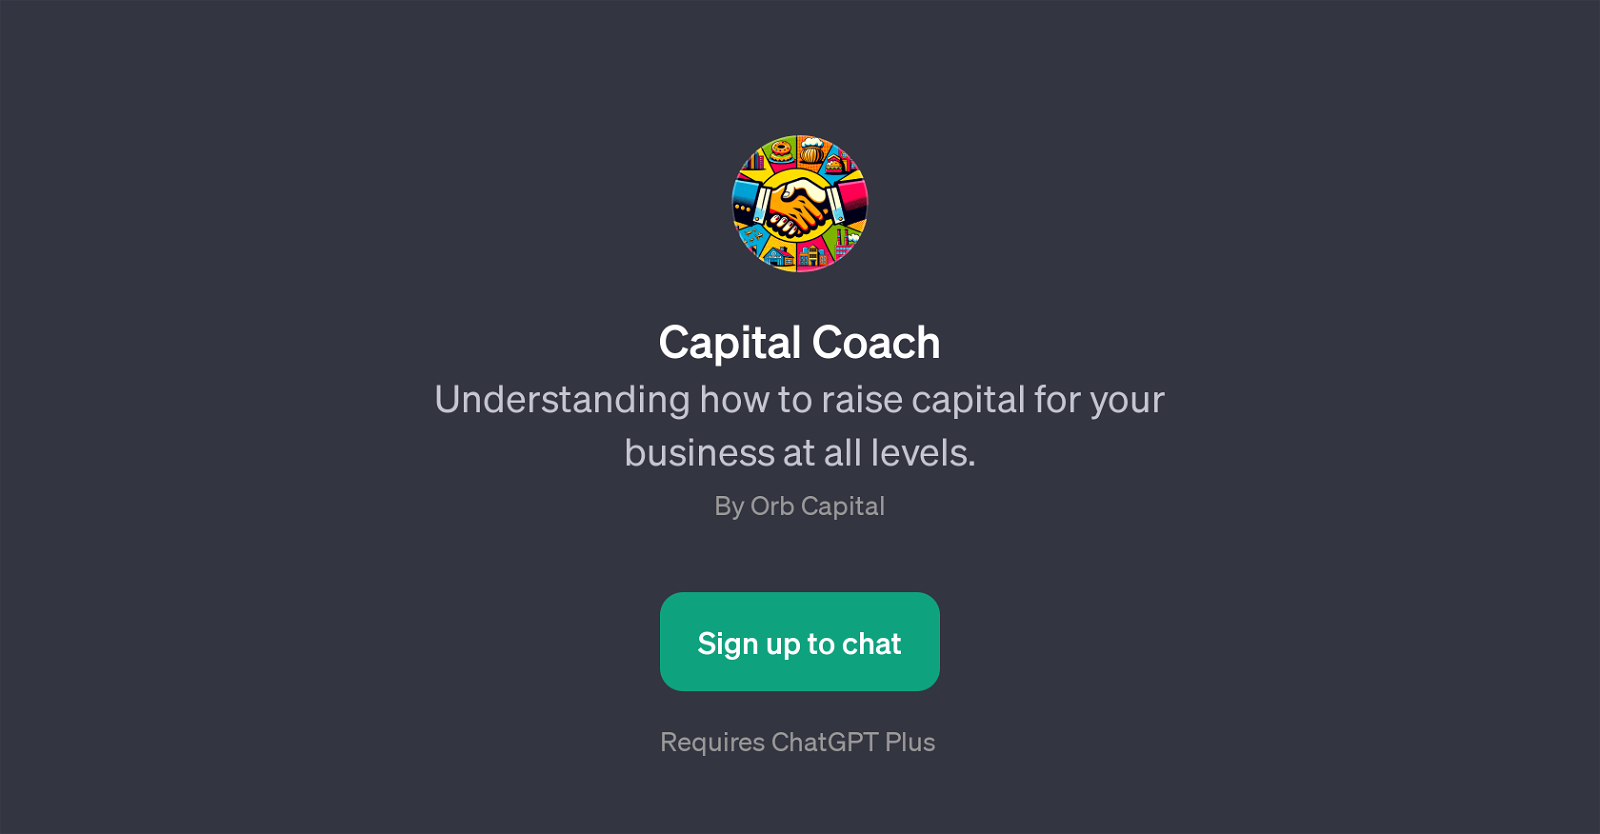 Capital Coach website